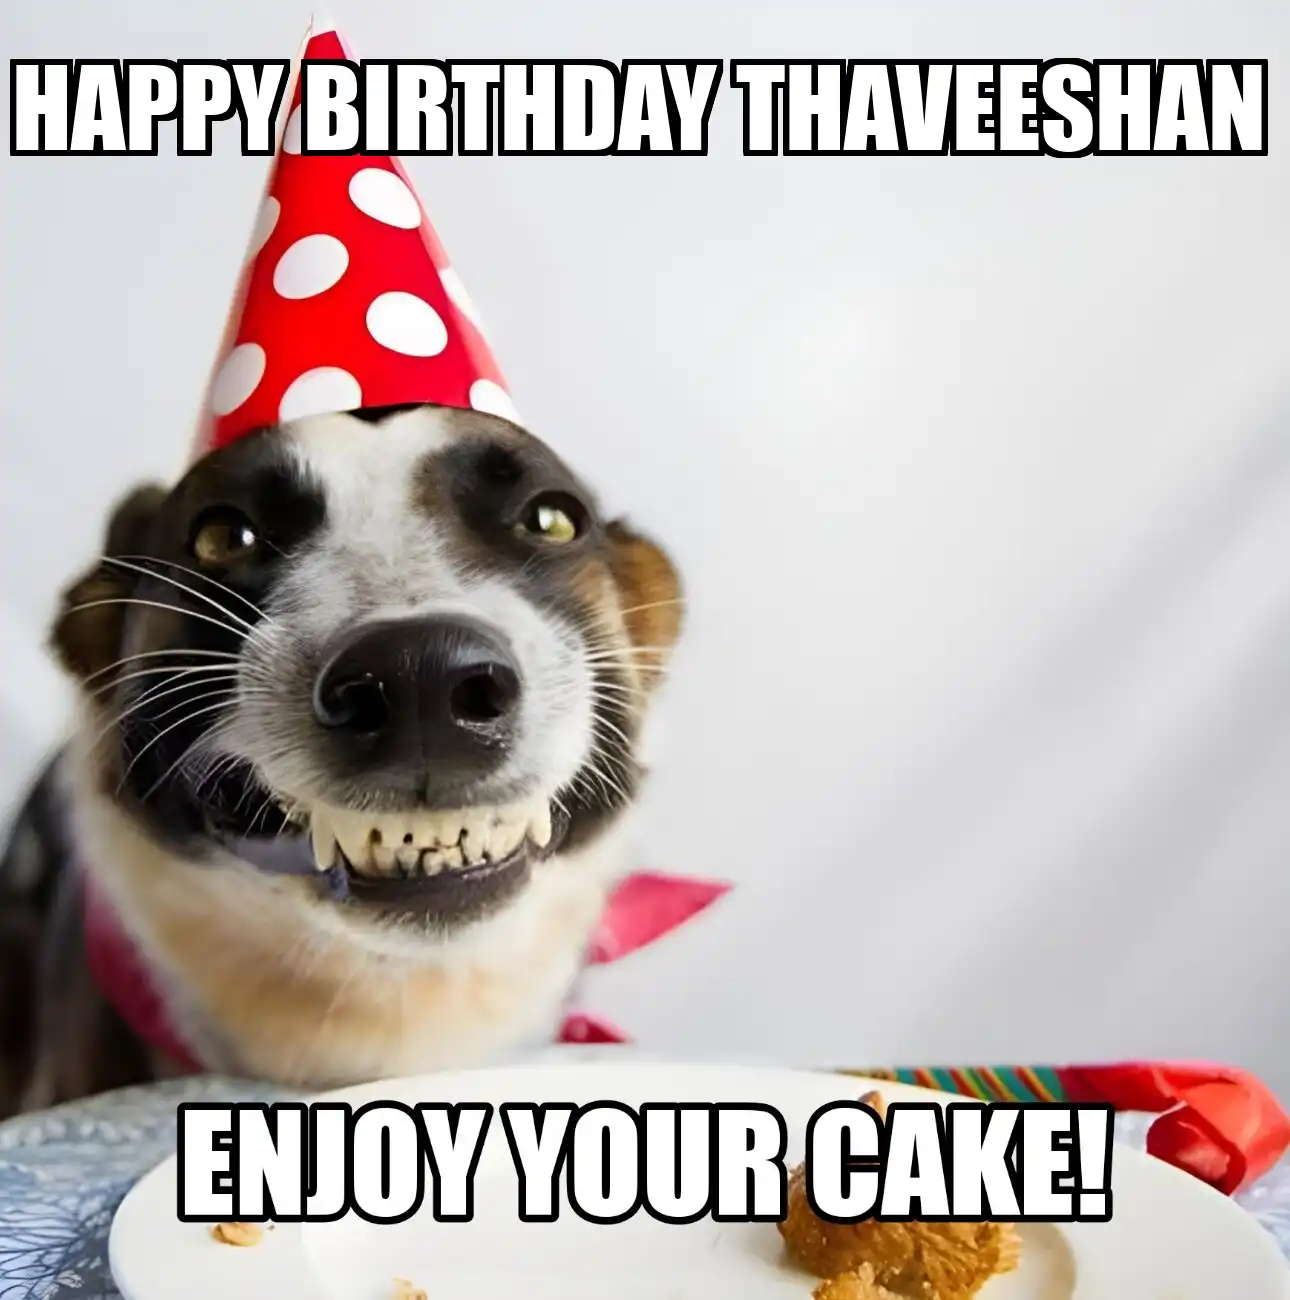 Happy Birthday Thaveeshan Enjoy Your Cake Dog Meme